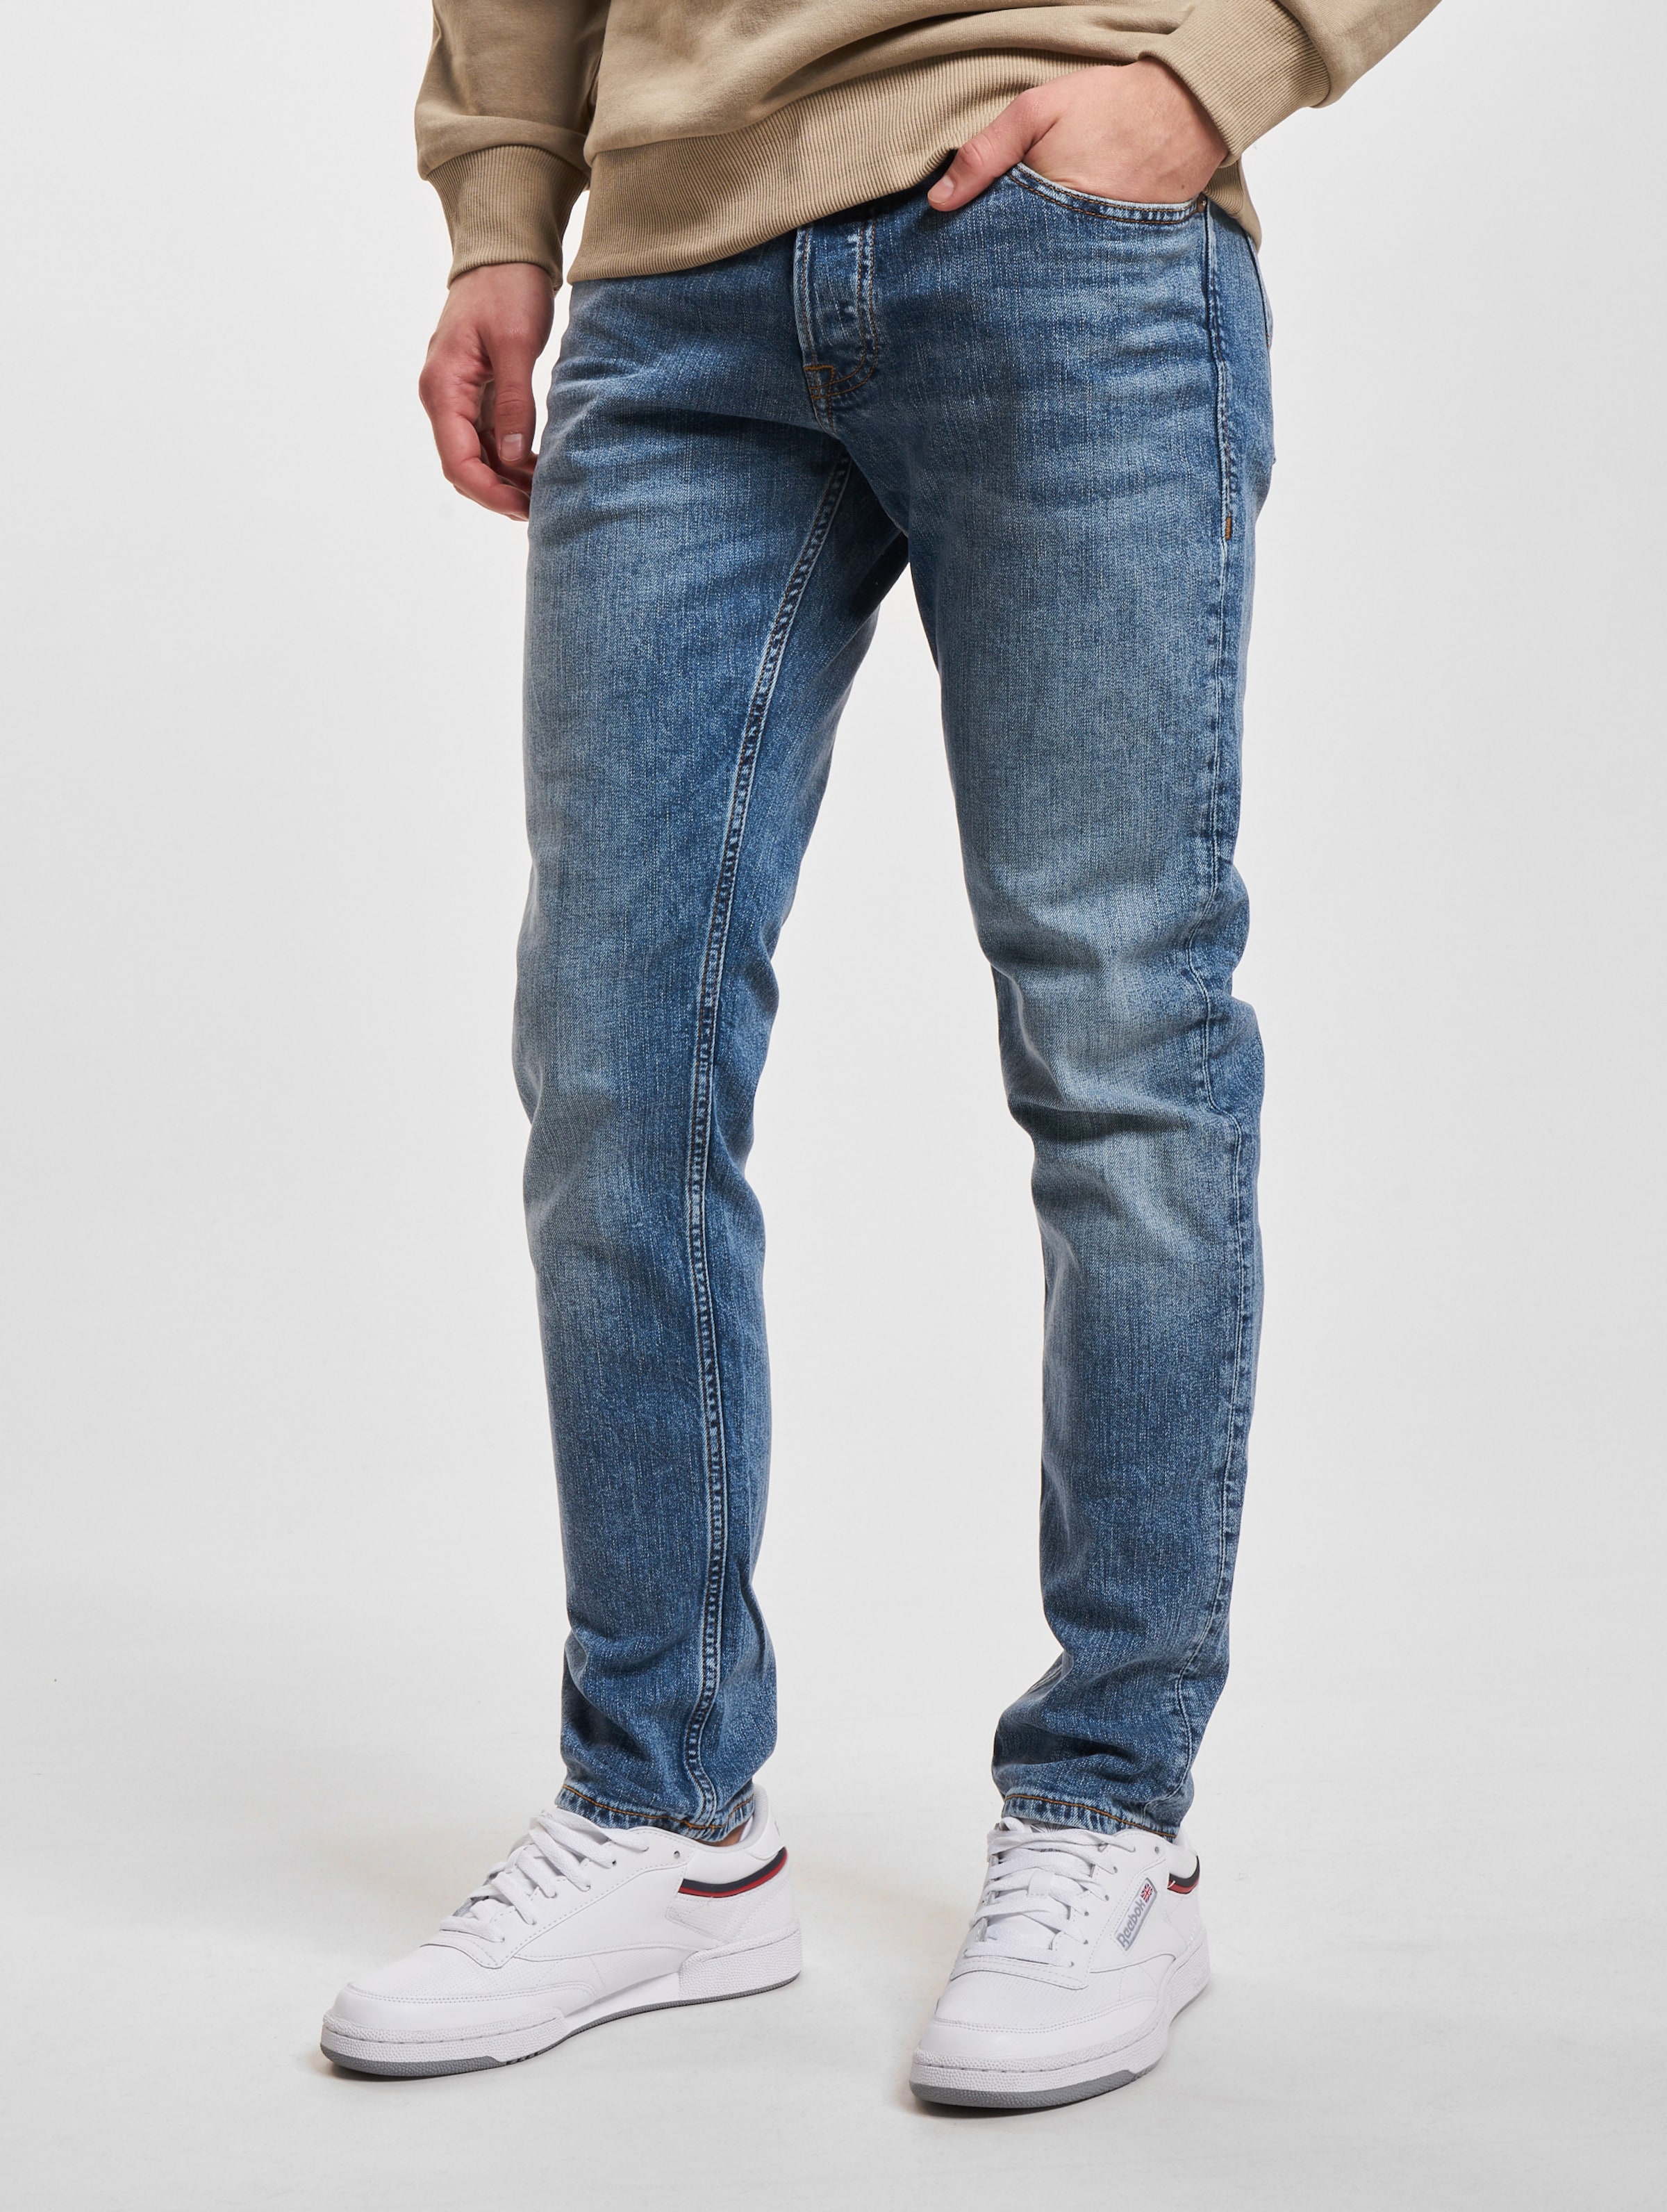 Jack & Jones Glenn Original Skinny Fit Jeans Mannen op kleur blauw, Maat 3032